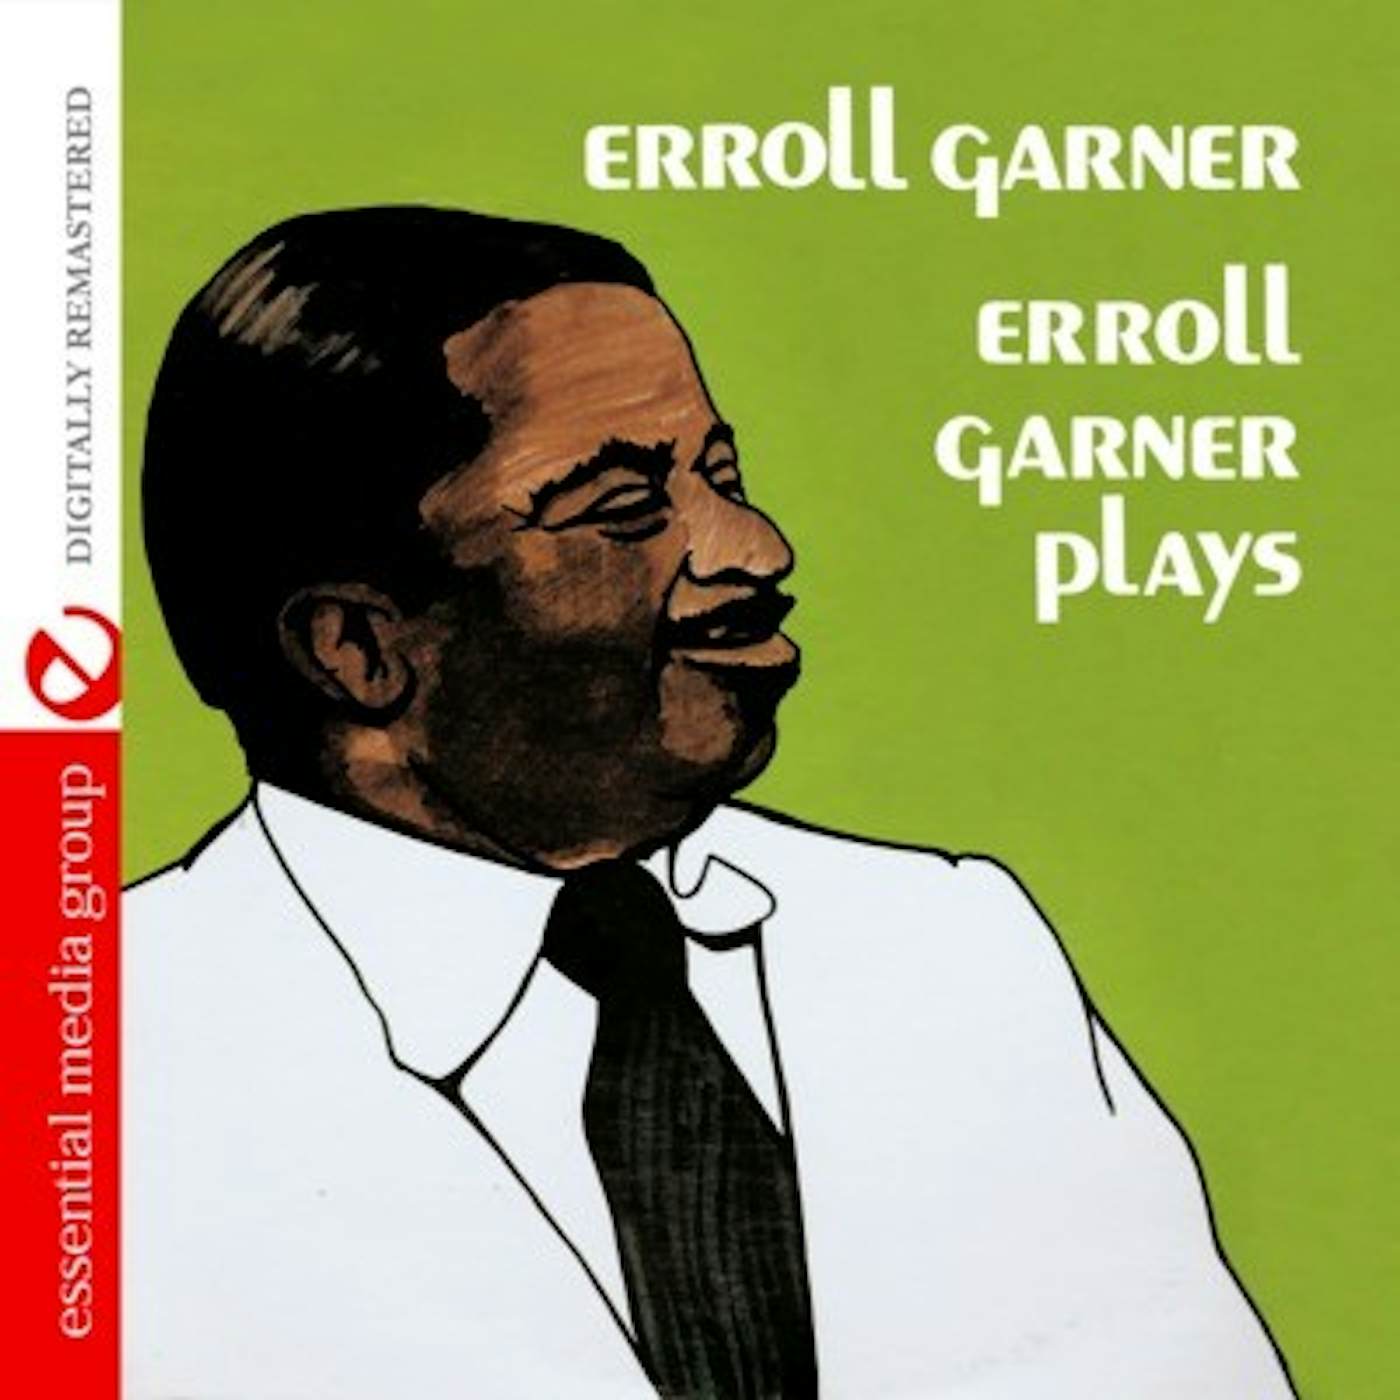 ERROLL GARNER PLAYS CD